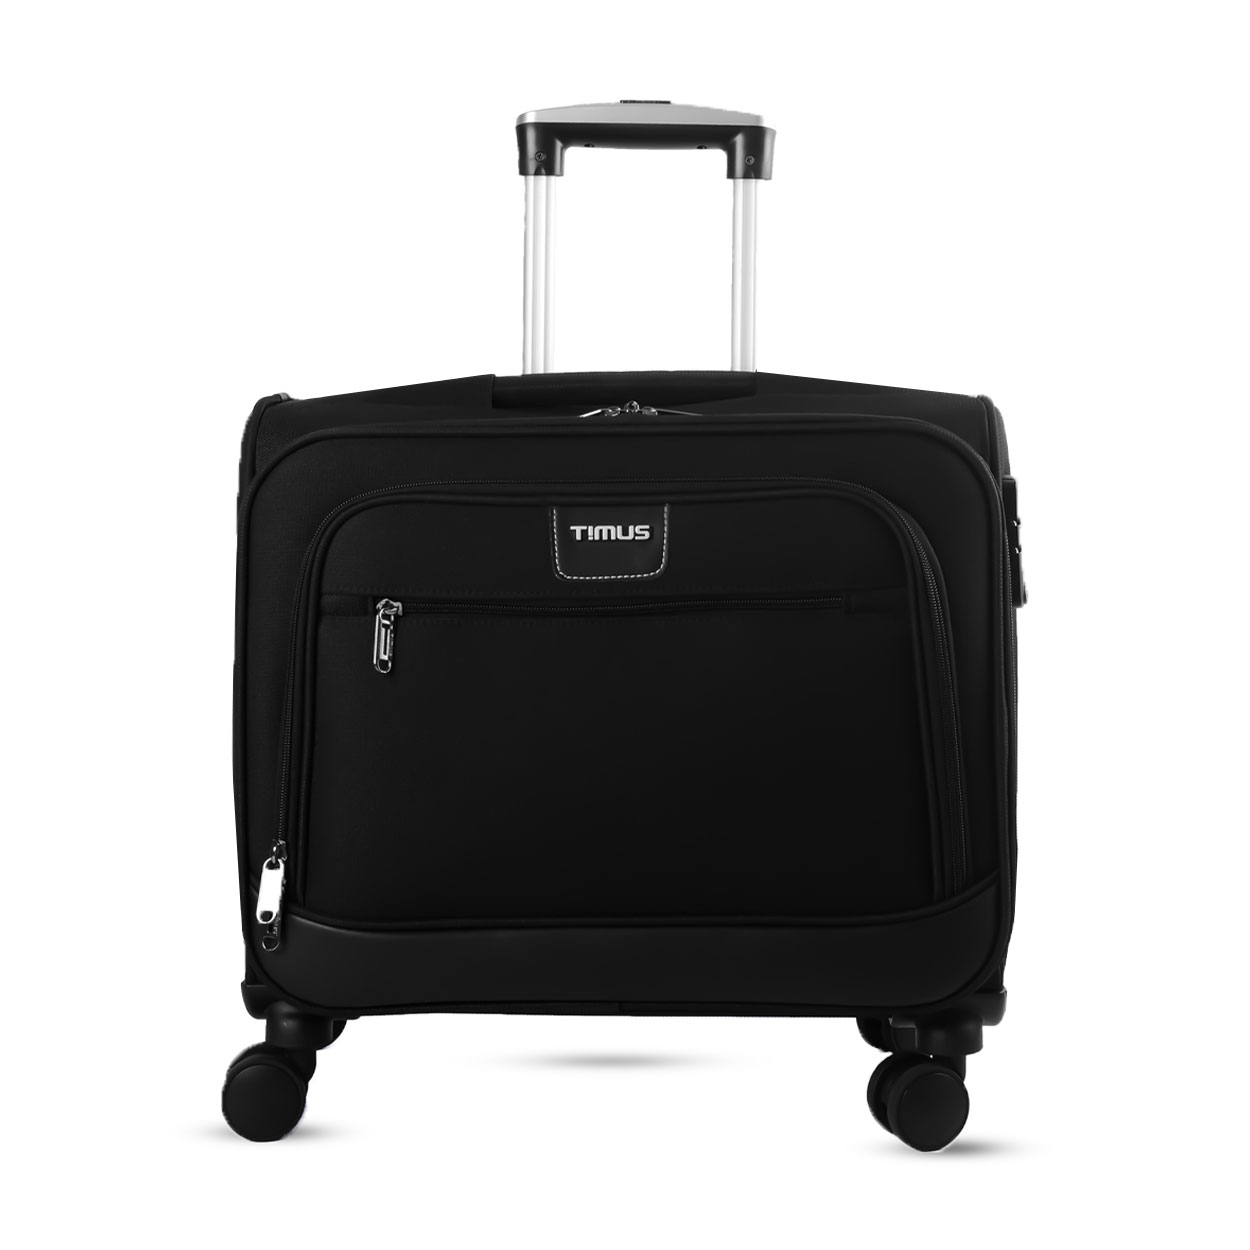 Timus-Lifestyle-Luggage-Soft-Luggage-Trolly-Bags-Atlanta-Pro-Black-1